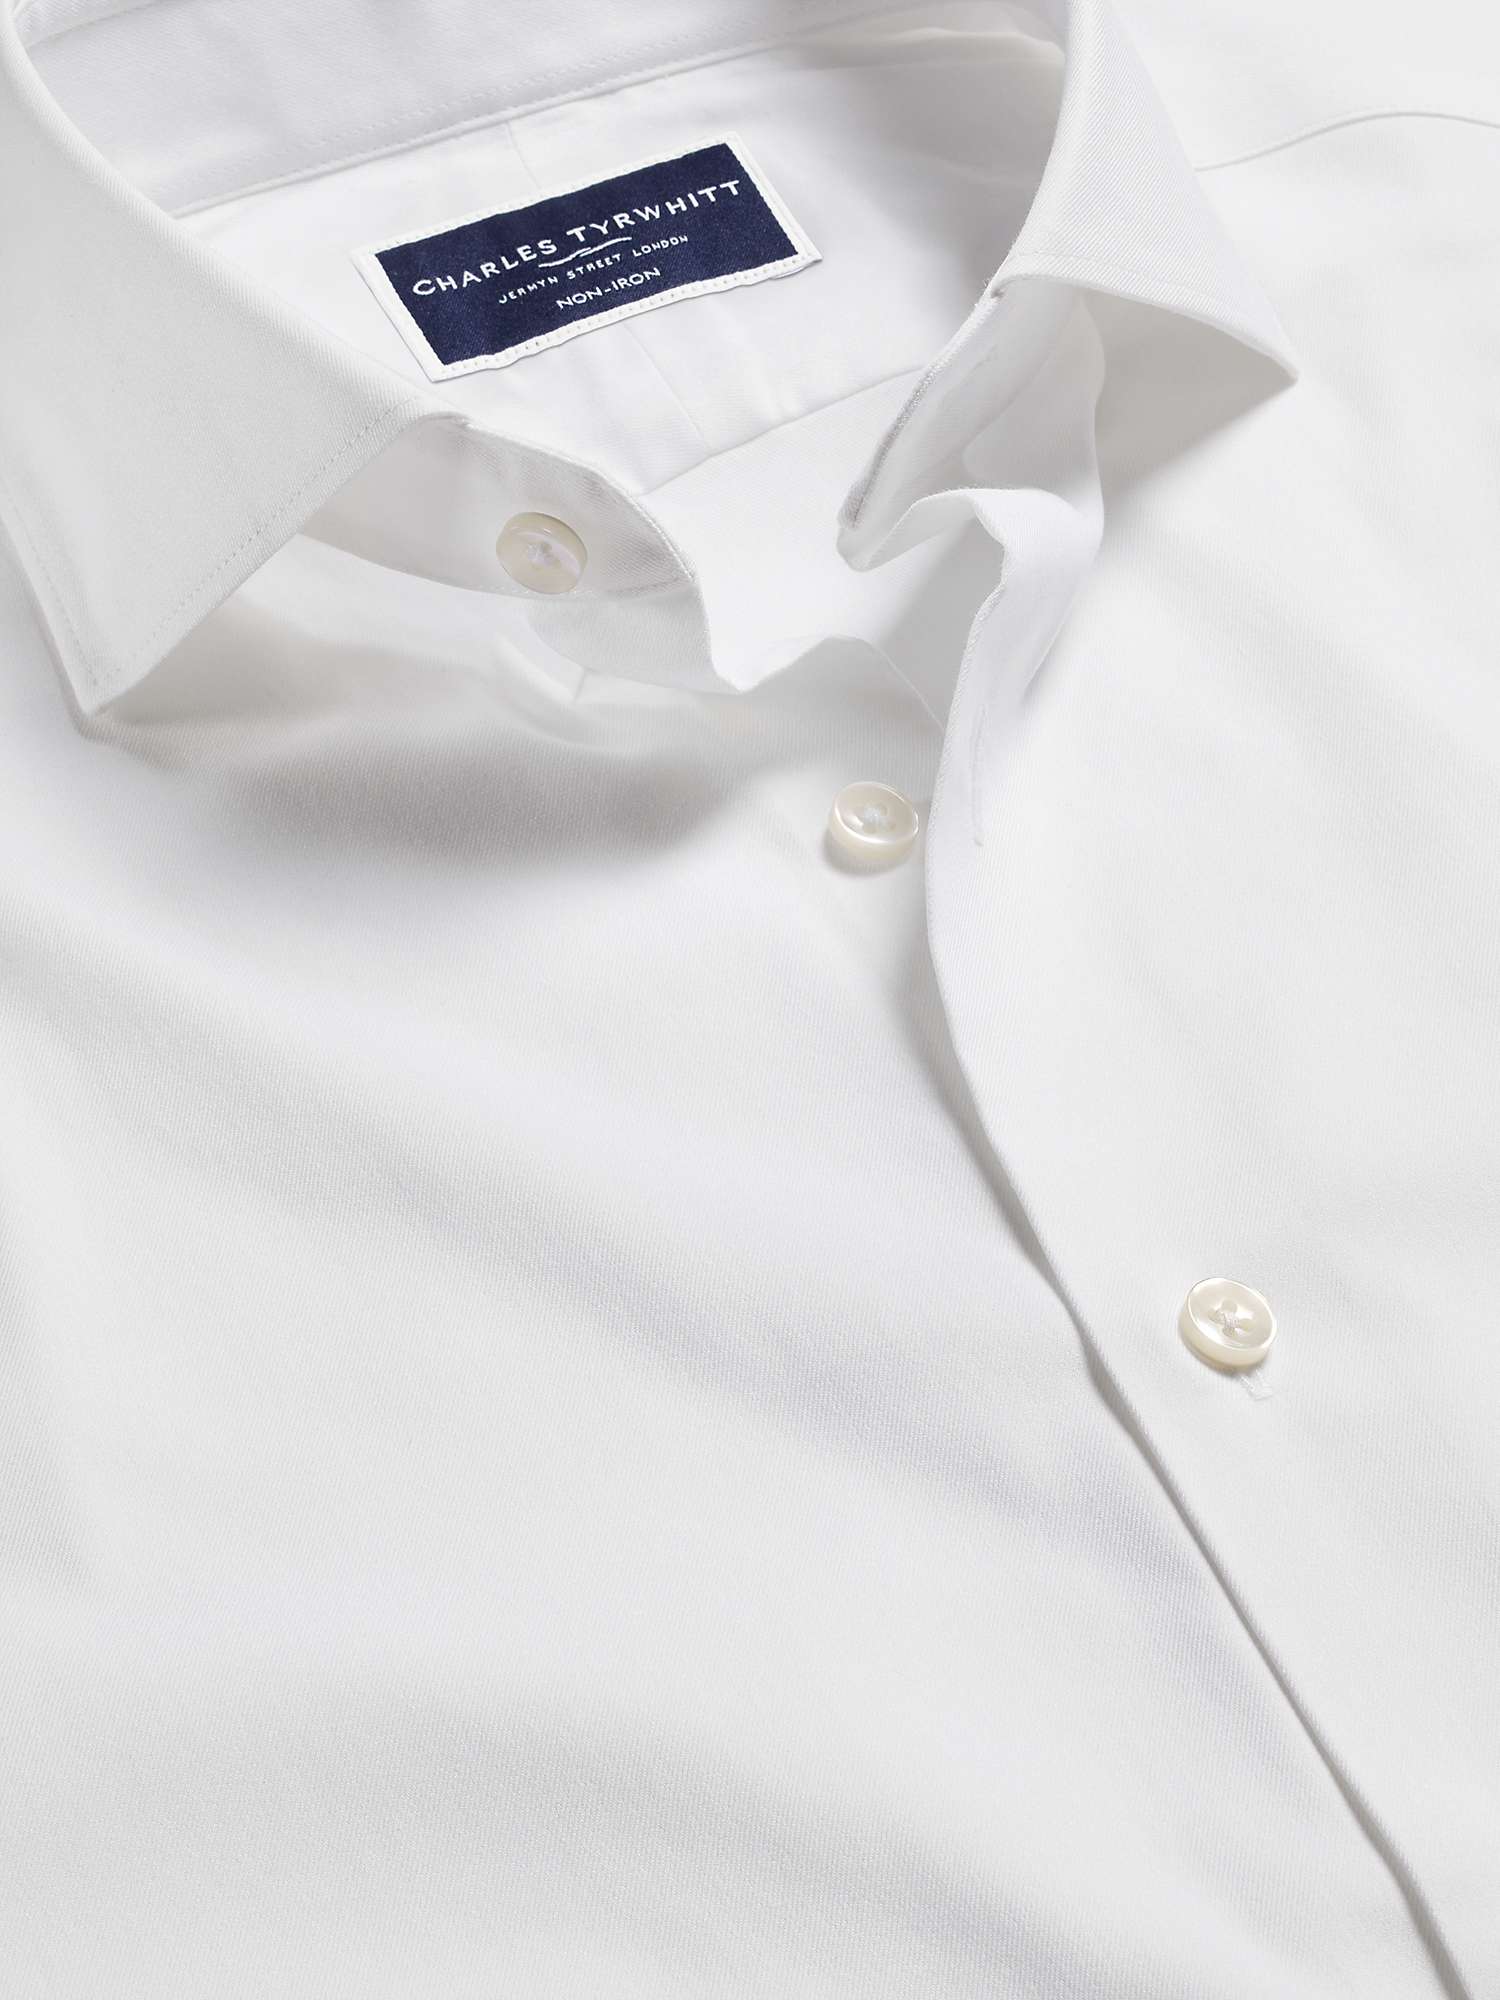 Buy Charles Tyrwhitt Stretch Twill Slim Fit Shirt, White Online at johnlewis.com